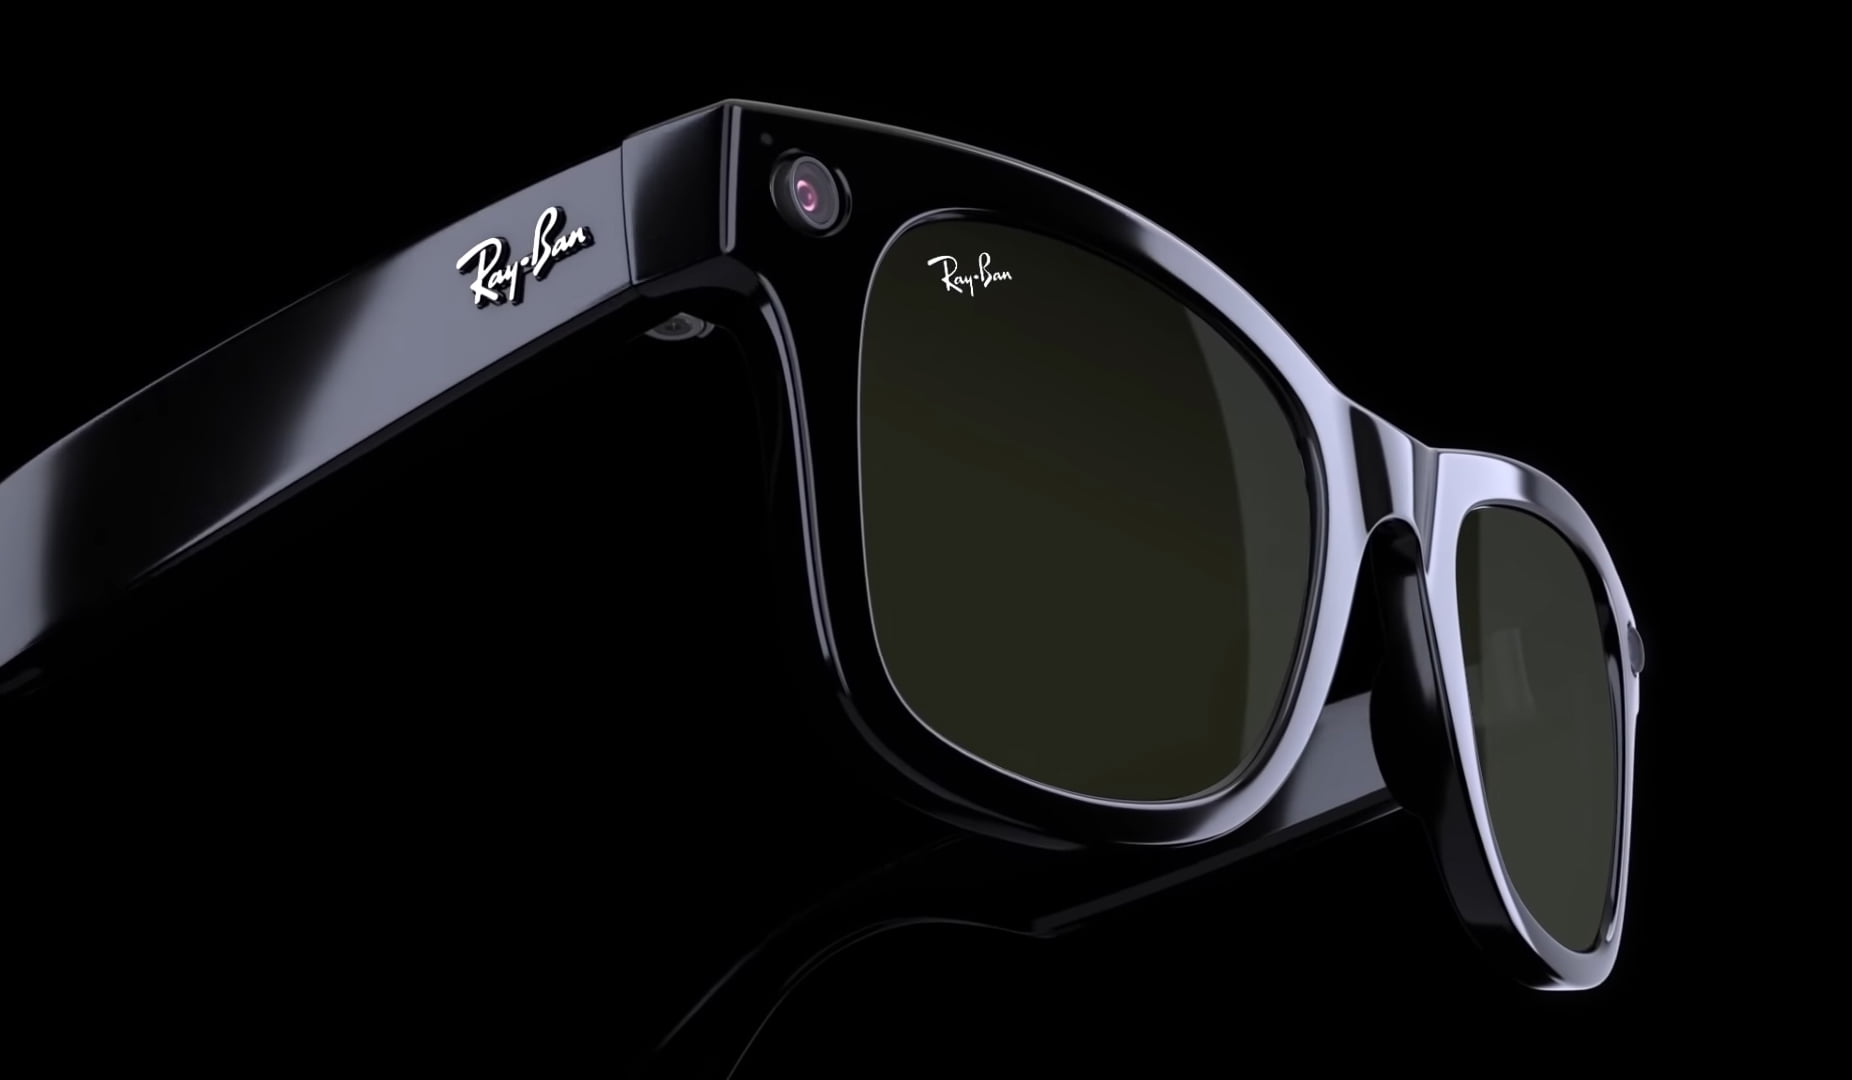 The world’s largest eyewear manufacturer is now developing smartglasses